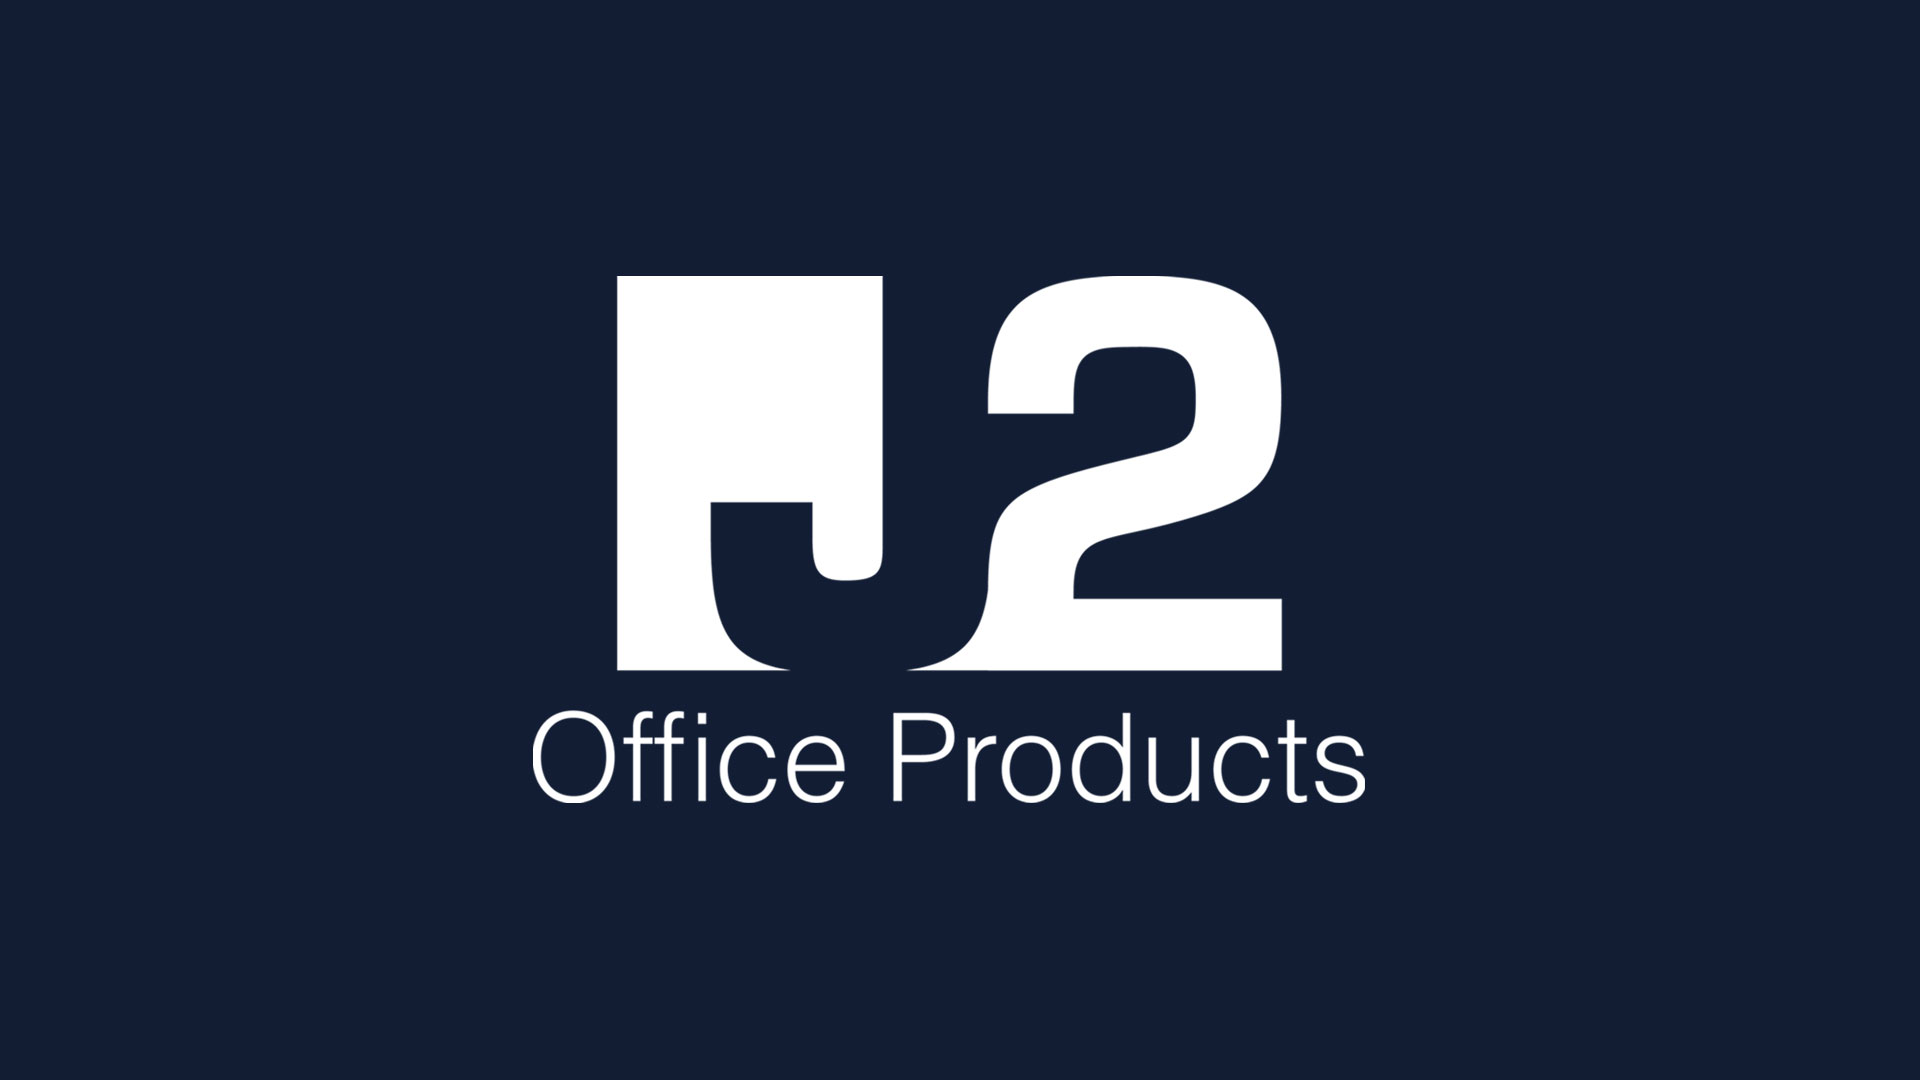 J2-Office-Products-Logo-K-1920x1080